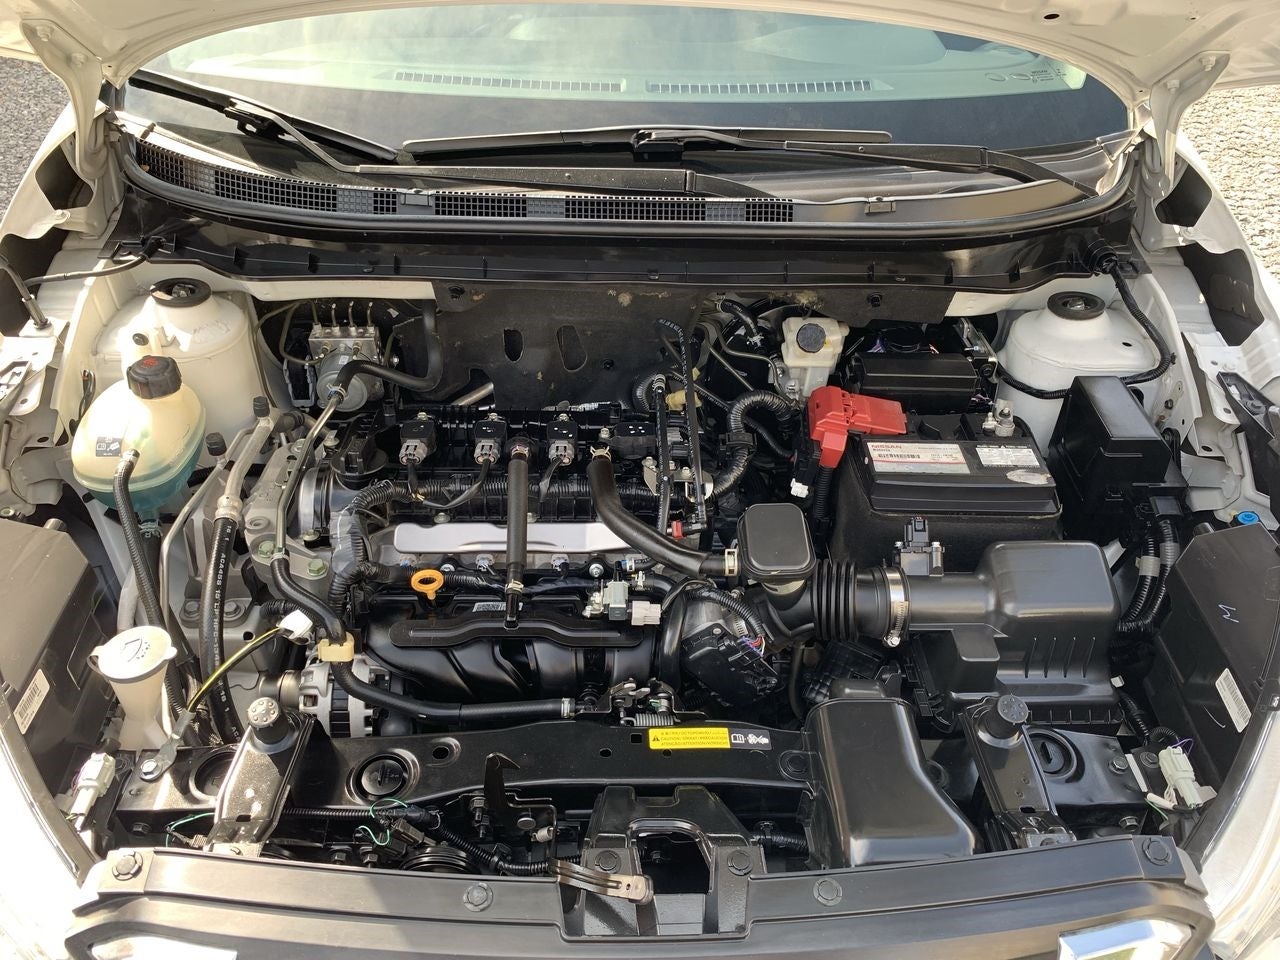 2018 Nissan KICKS 1.6 EXCLUSIVE LTS CVT A/C